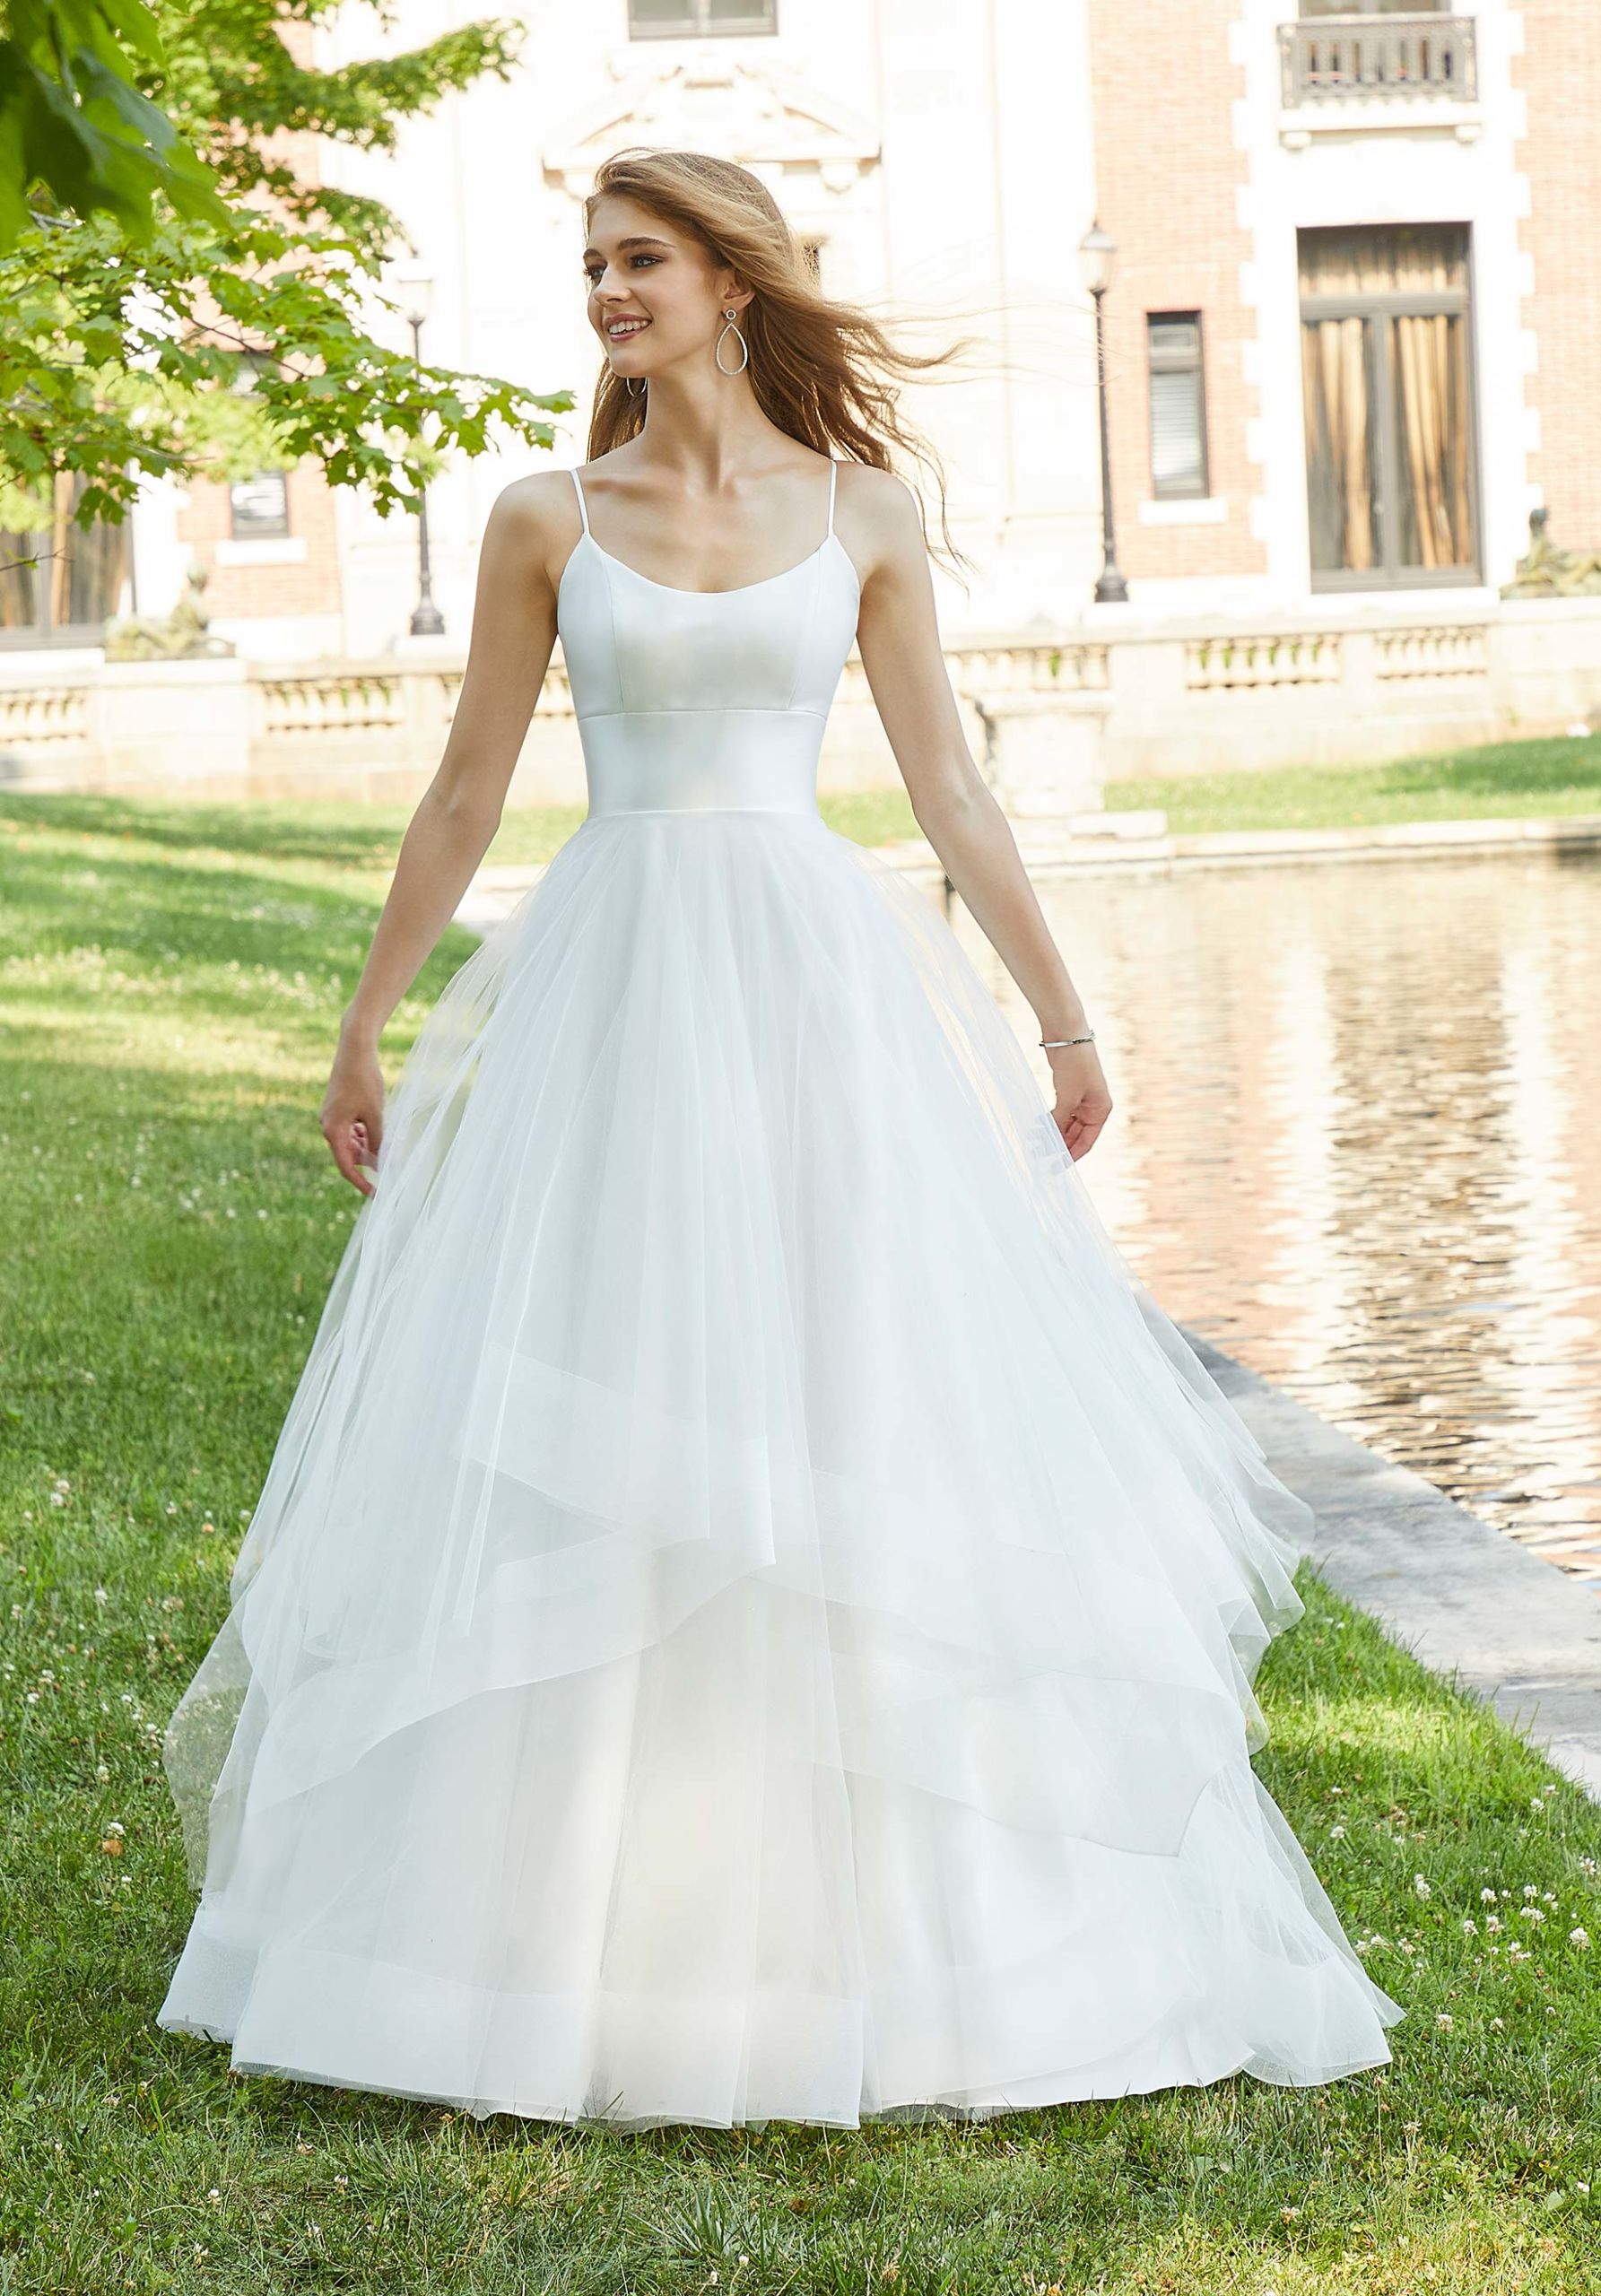 Morilee 6965 Delta wedding dress